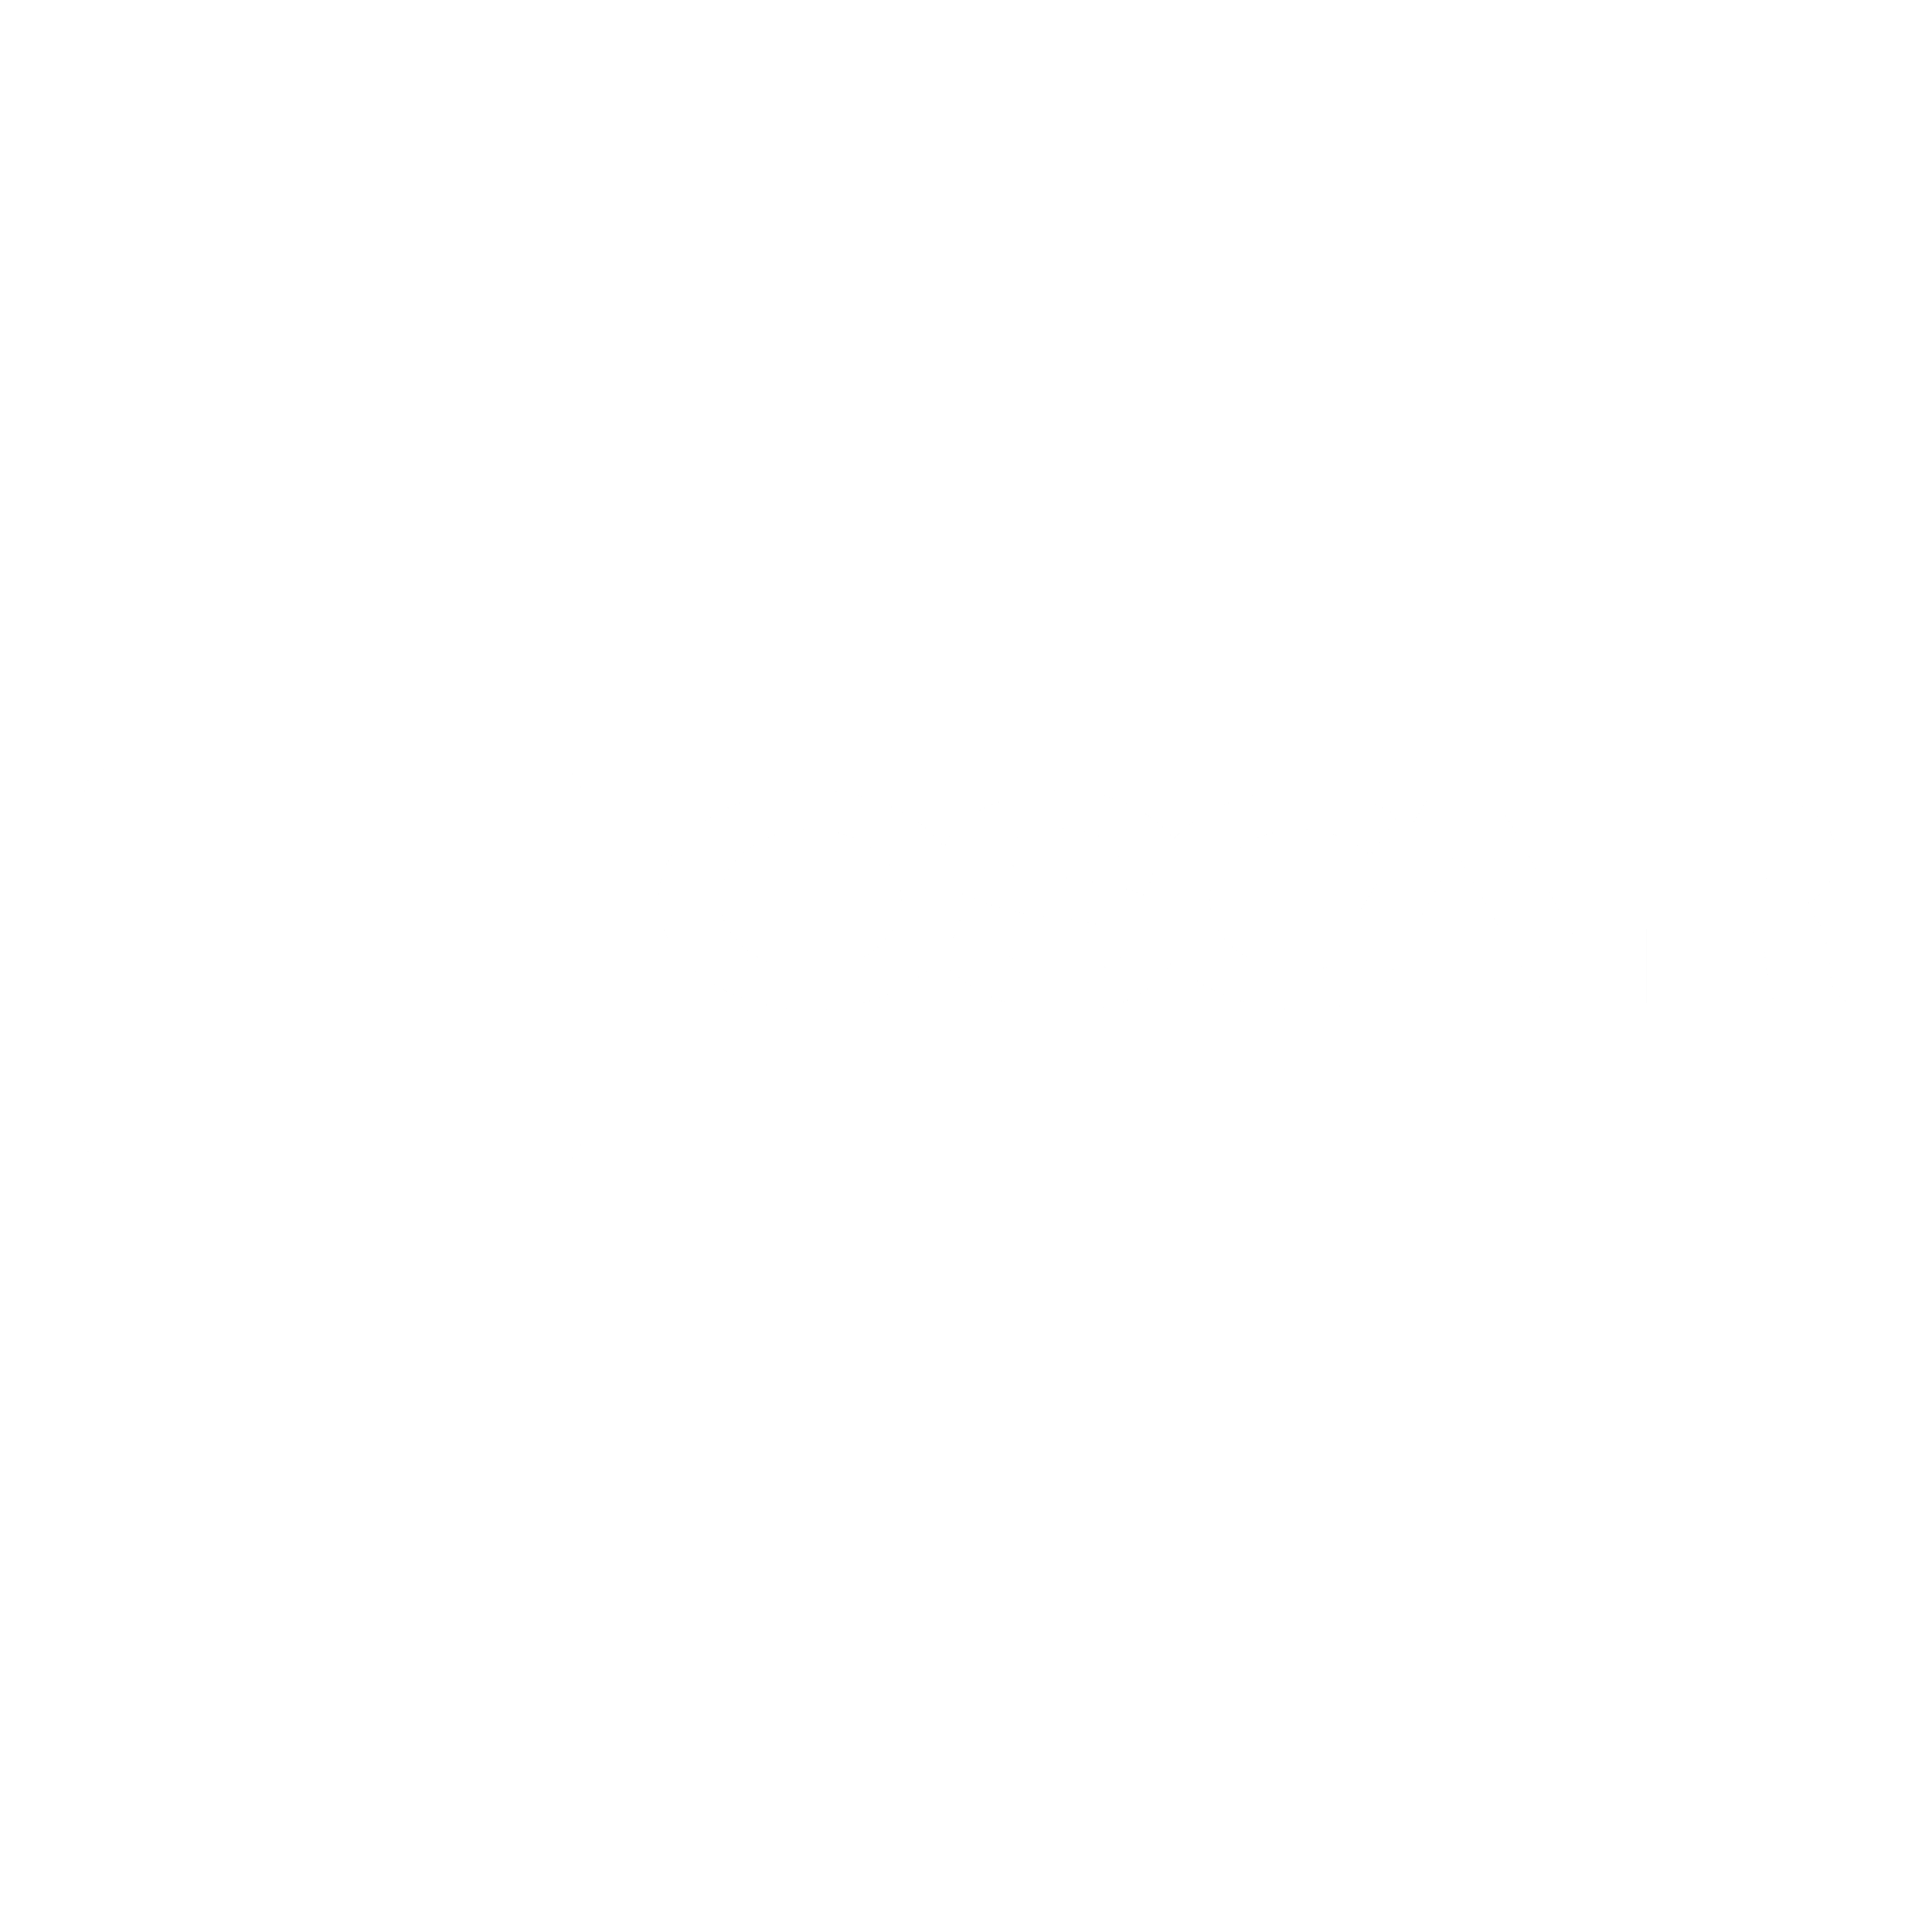 Oscar Logo PNG Transparent & SVG Vector.